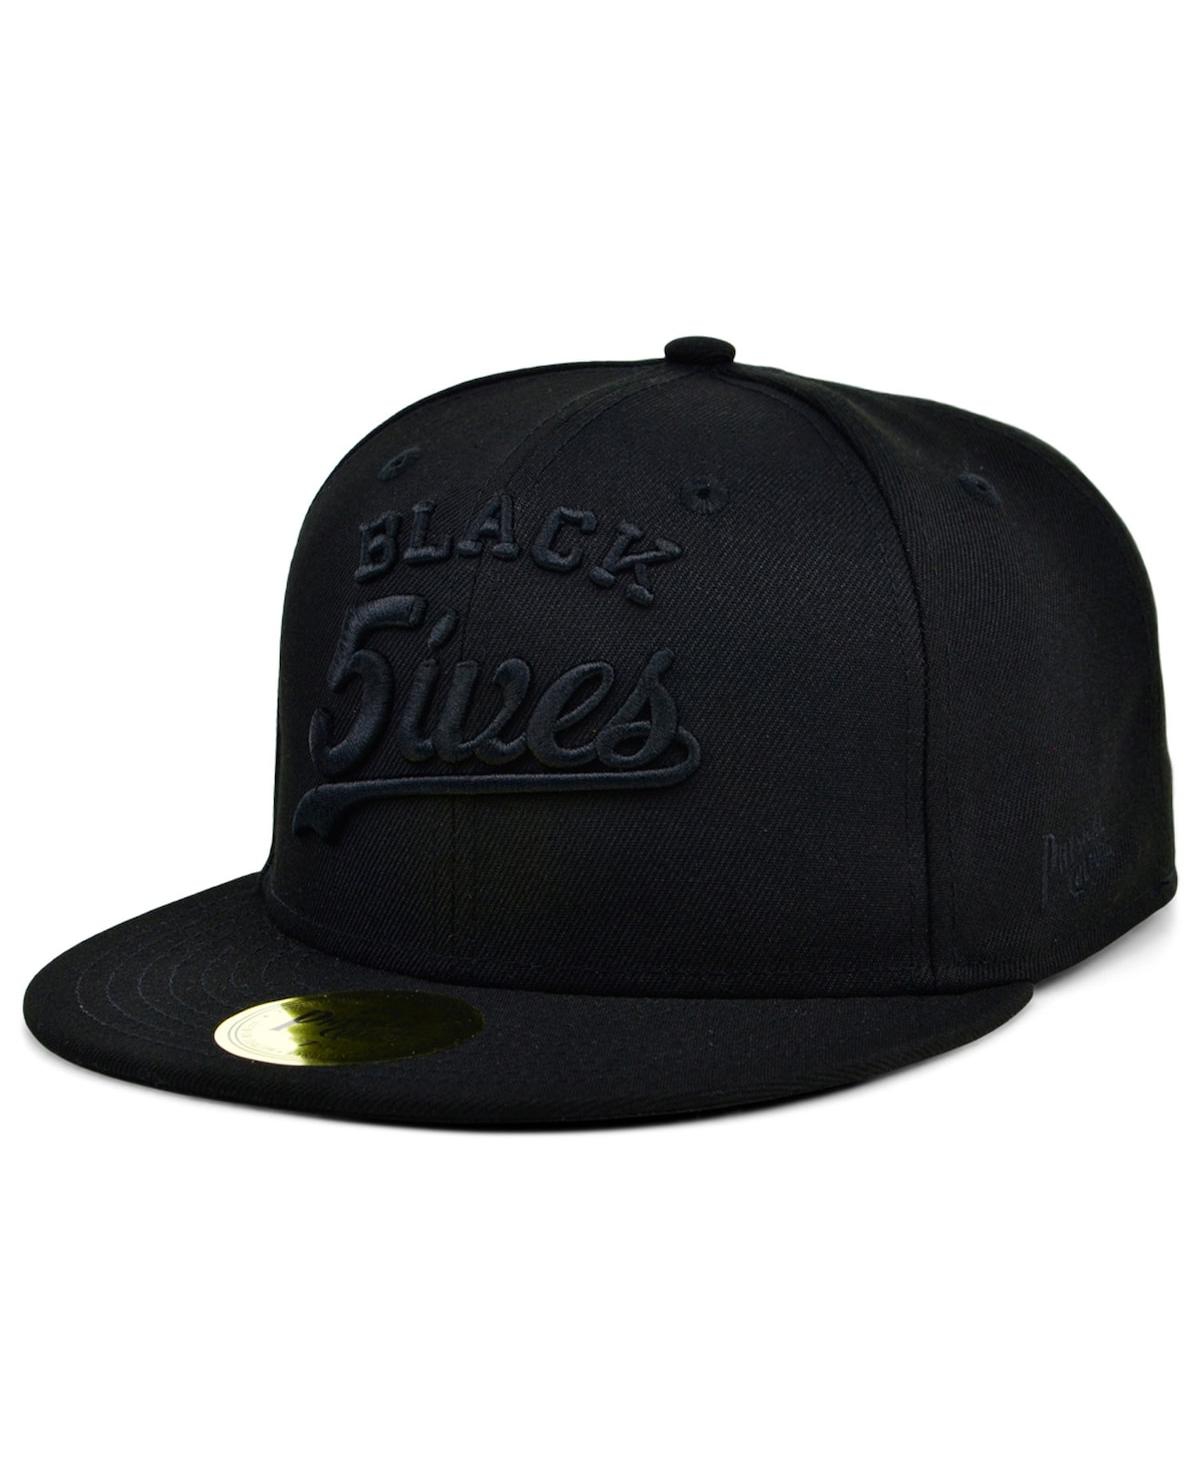 Men's Physical Culture Black Black Fives Fitted Hat - Black